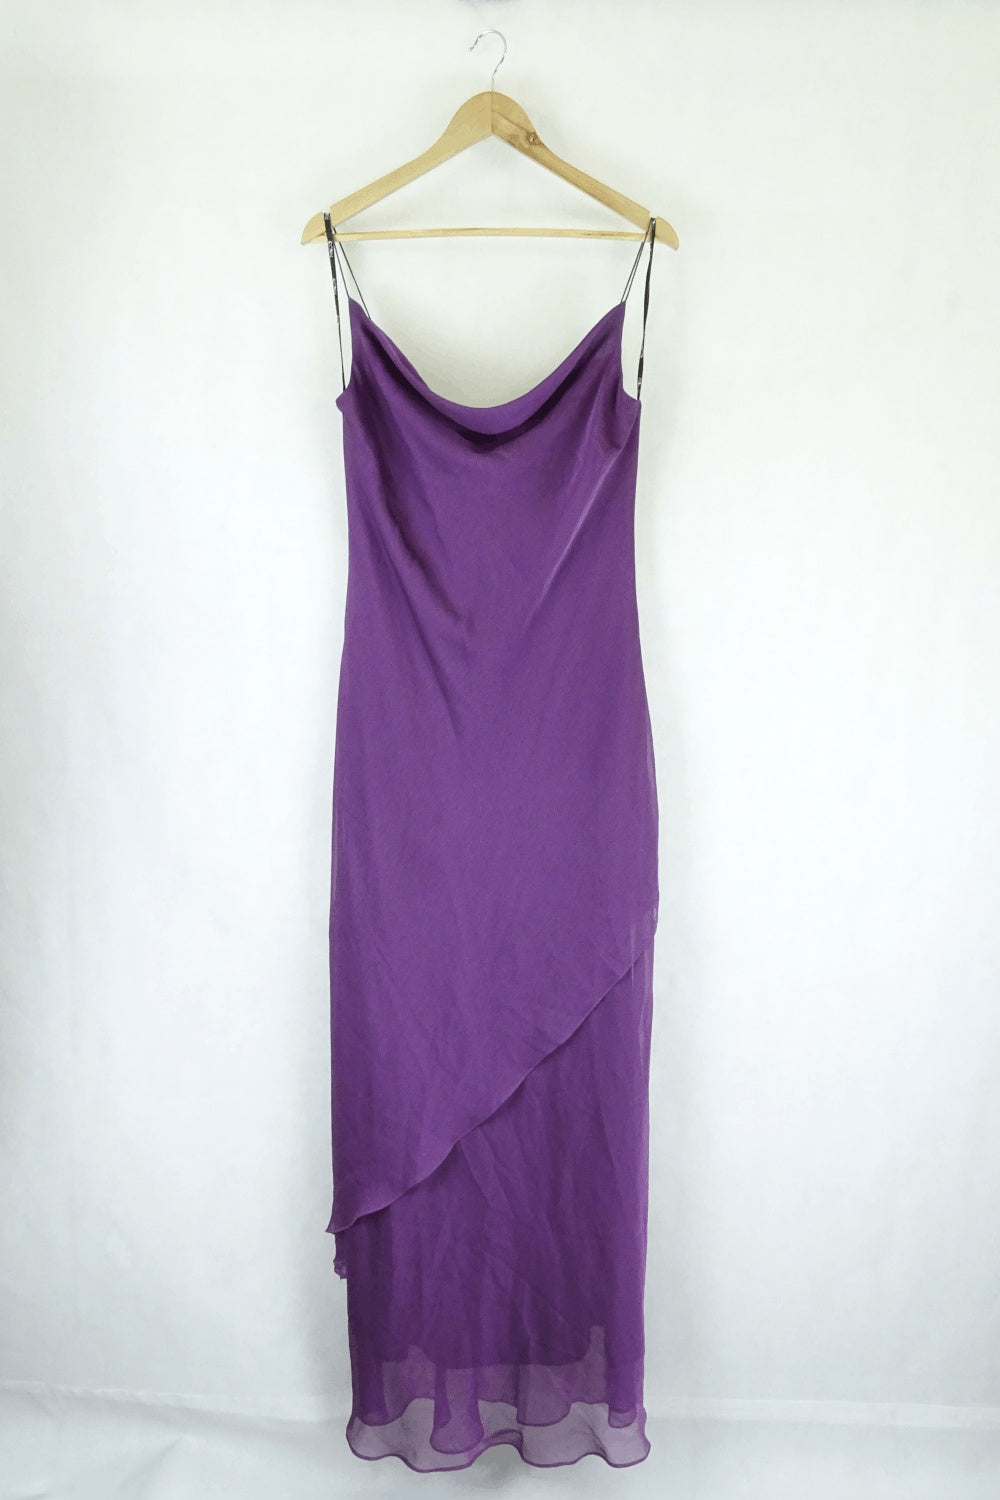 Paco Purple Dress 14